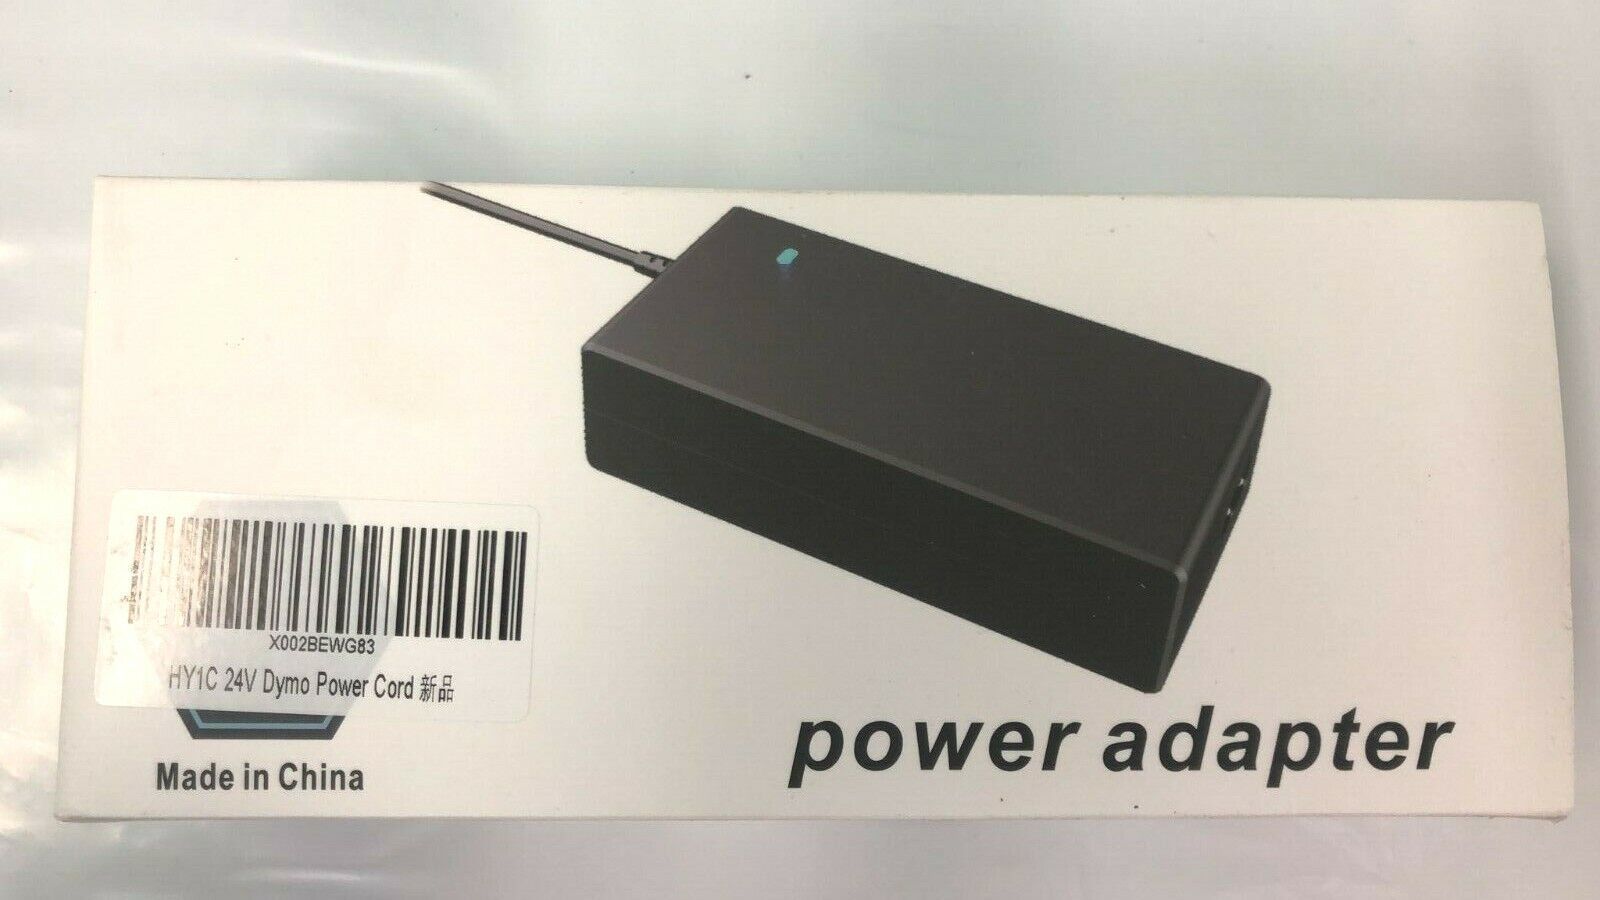 POWER ADAPTER HY1C 24V DYMO POWER CORD - $14.84